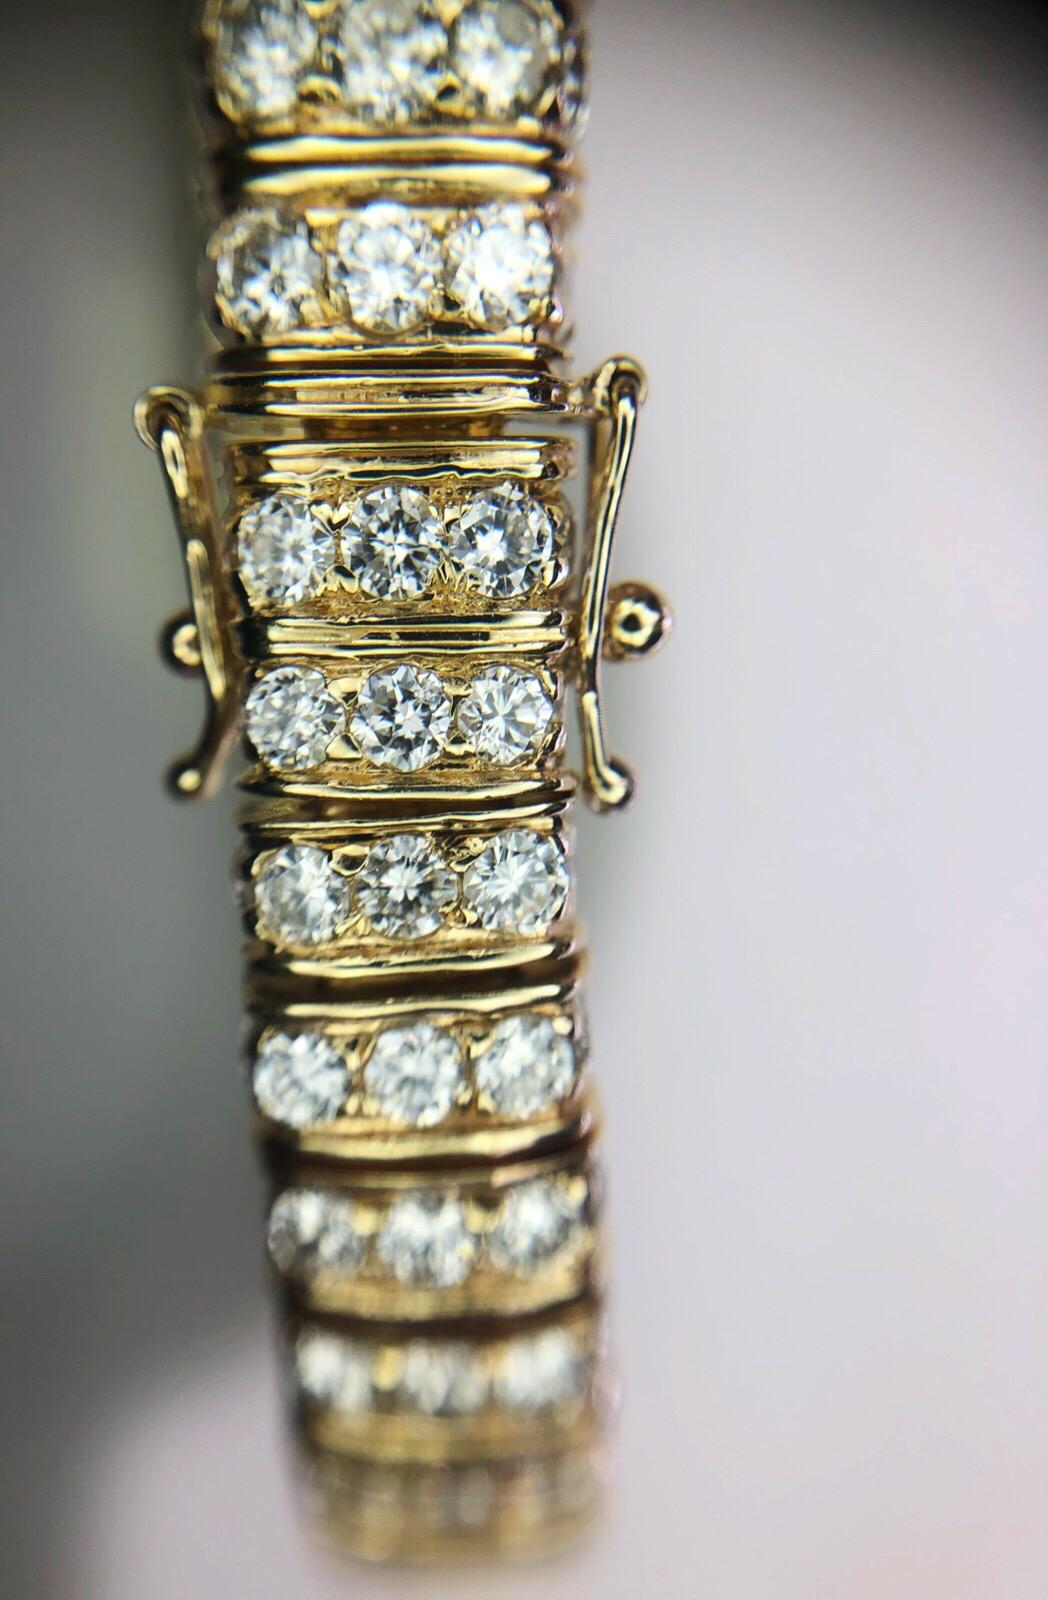 g color diamond 14kt white gold strand necklace